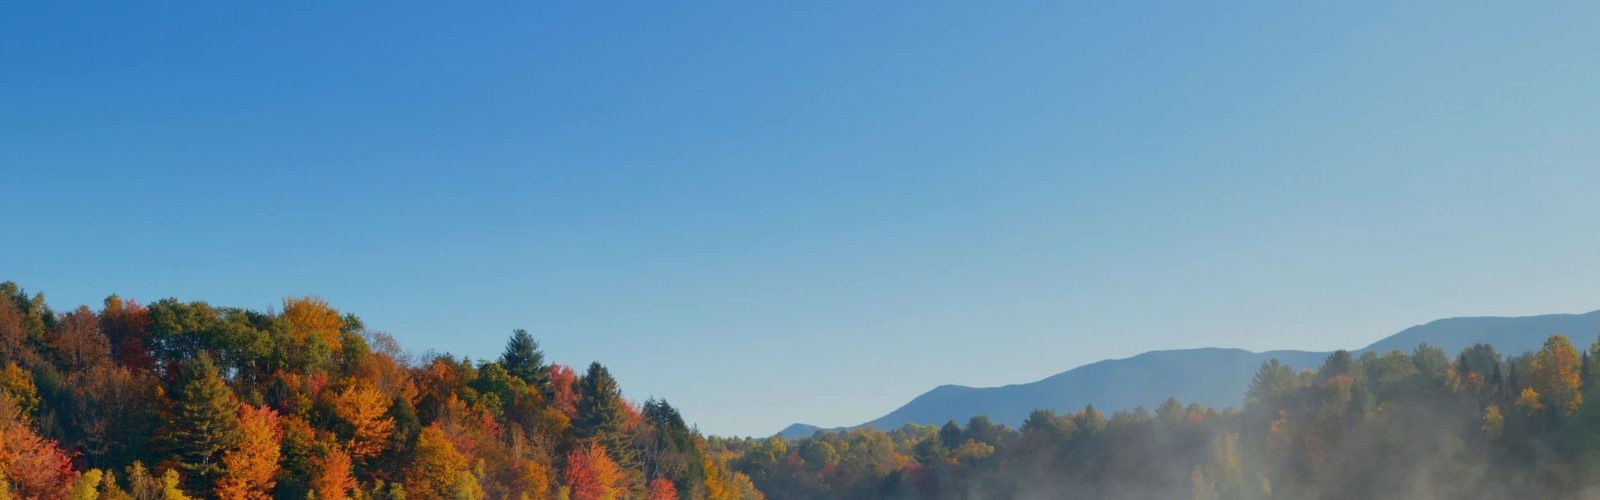 Mountains in foliage season in Vermont